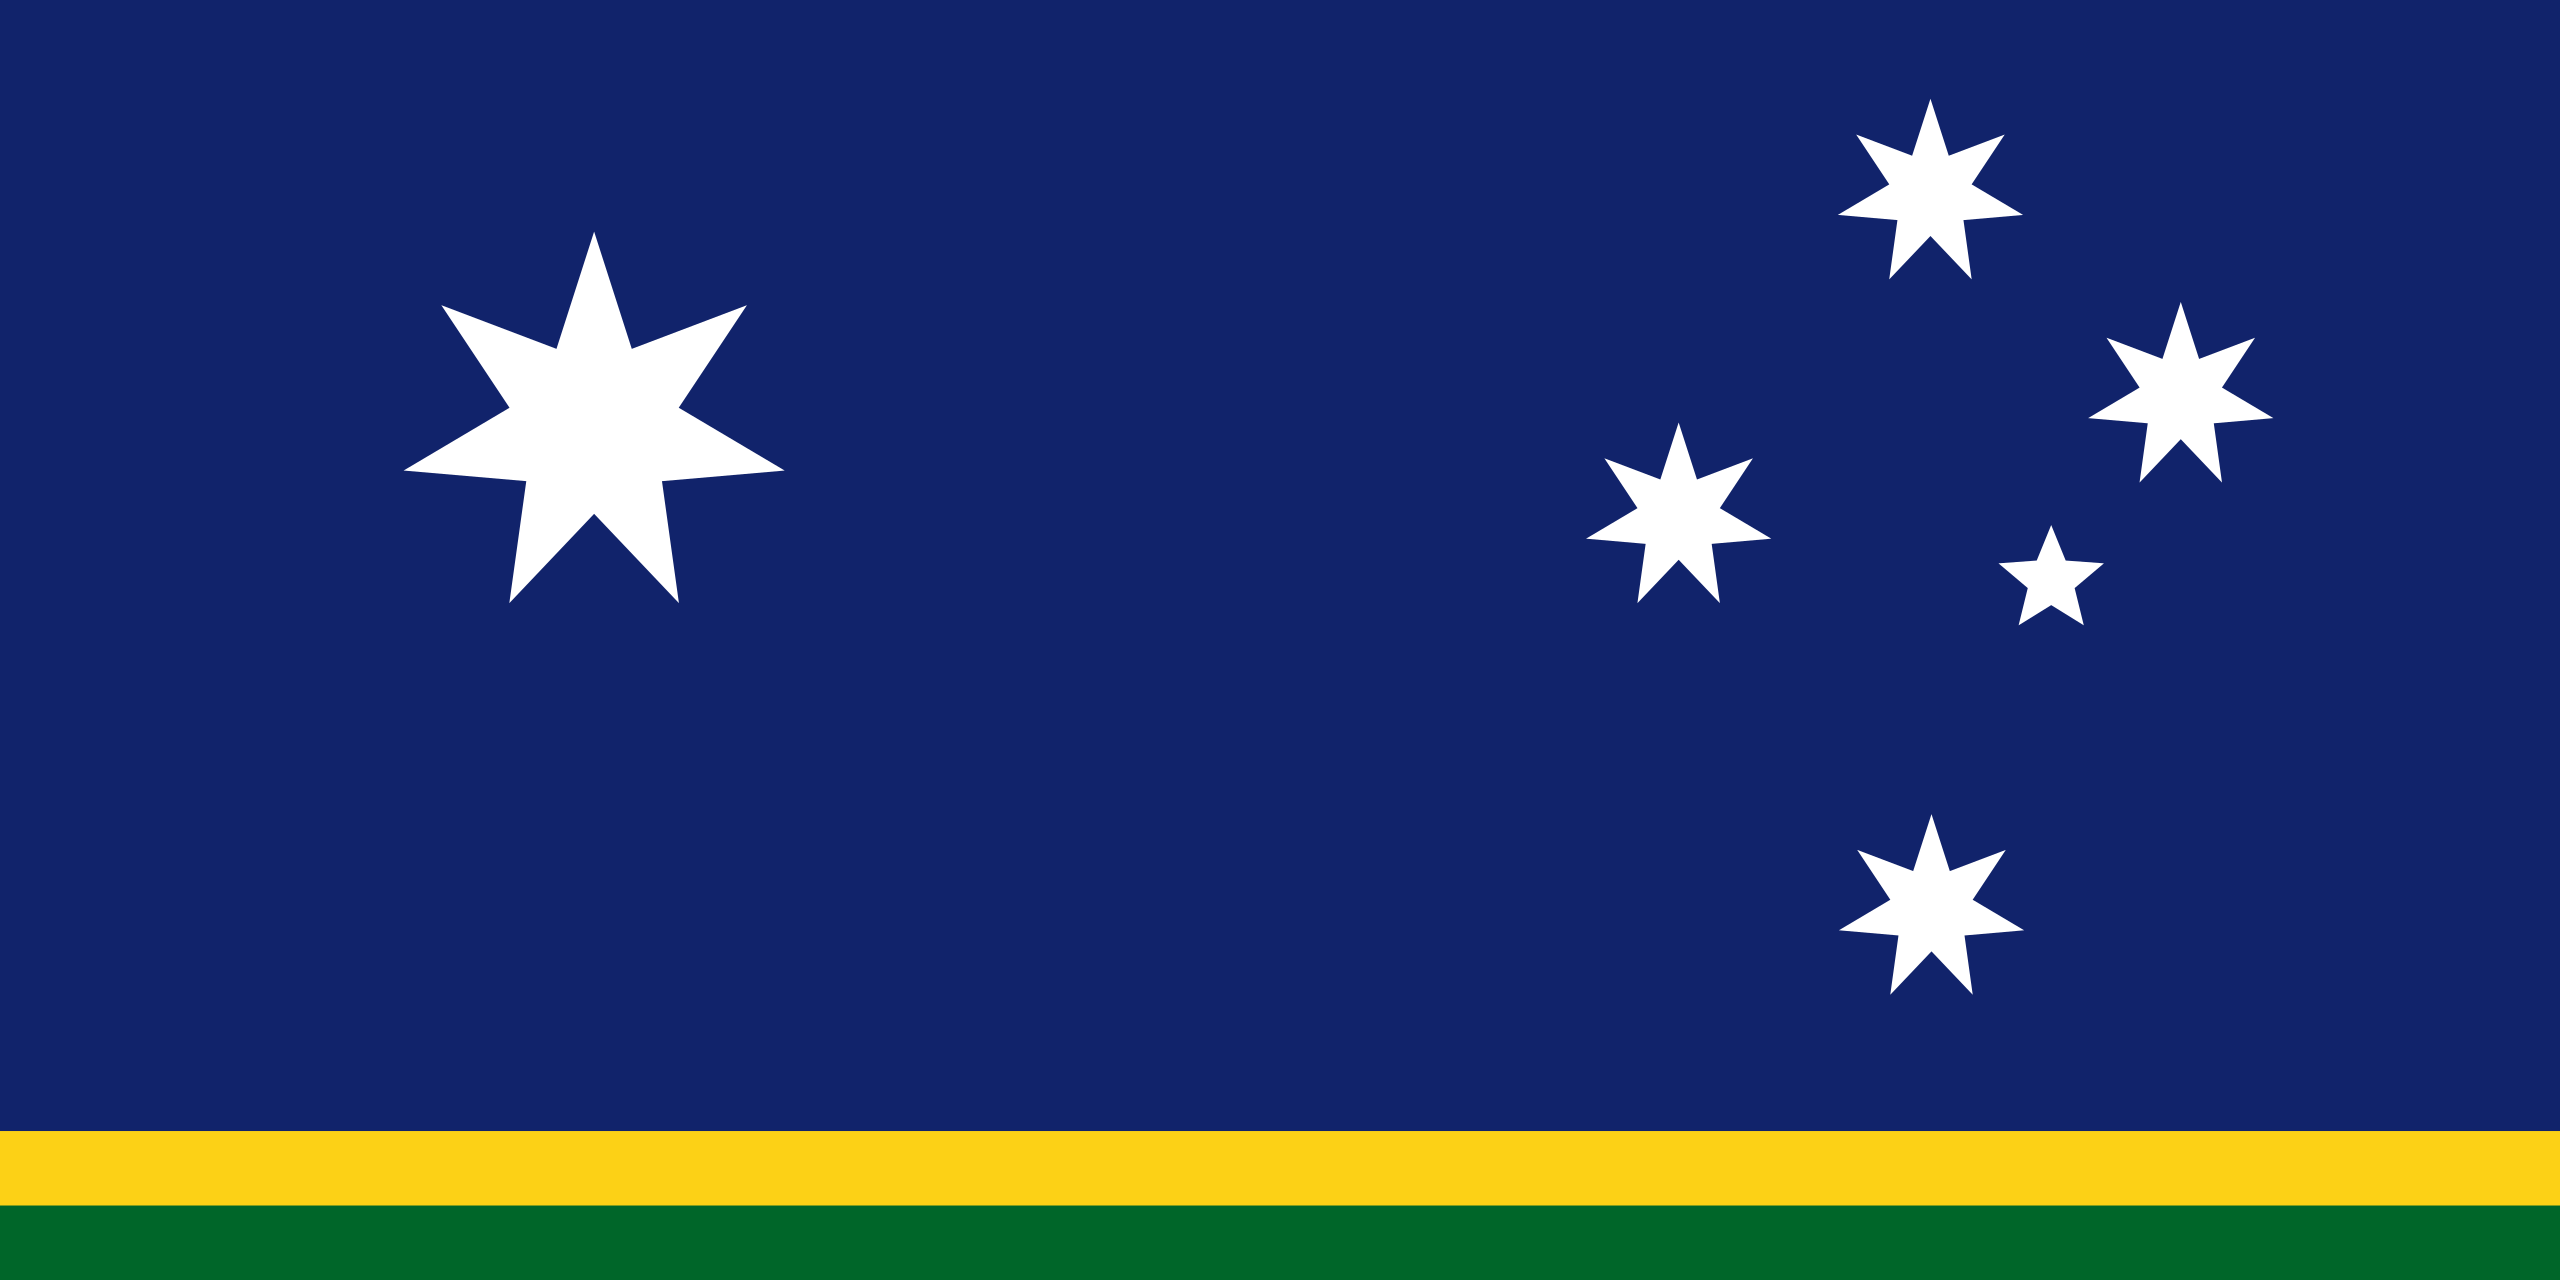 File:All Australian Flag (2006 Flag Proposal).svg - Wikimedia Commons